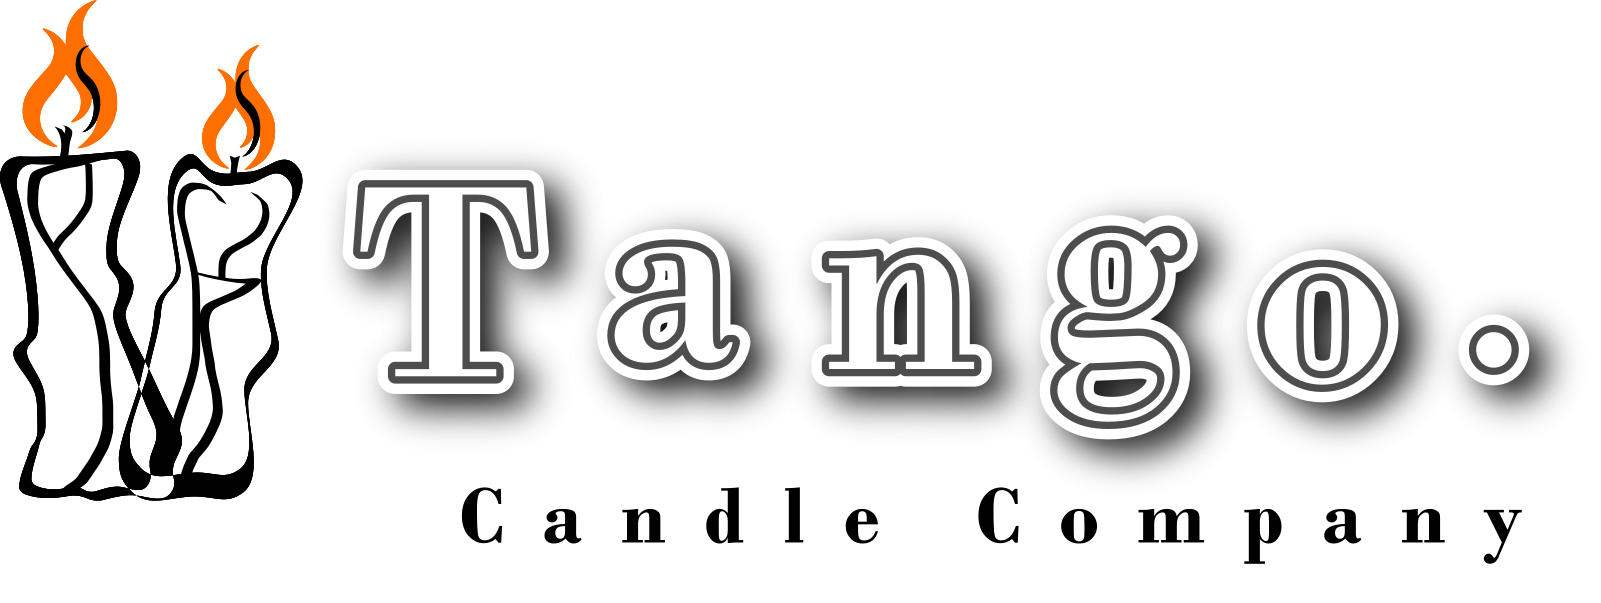 Tango logo